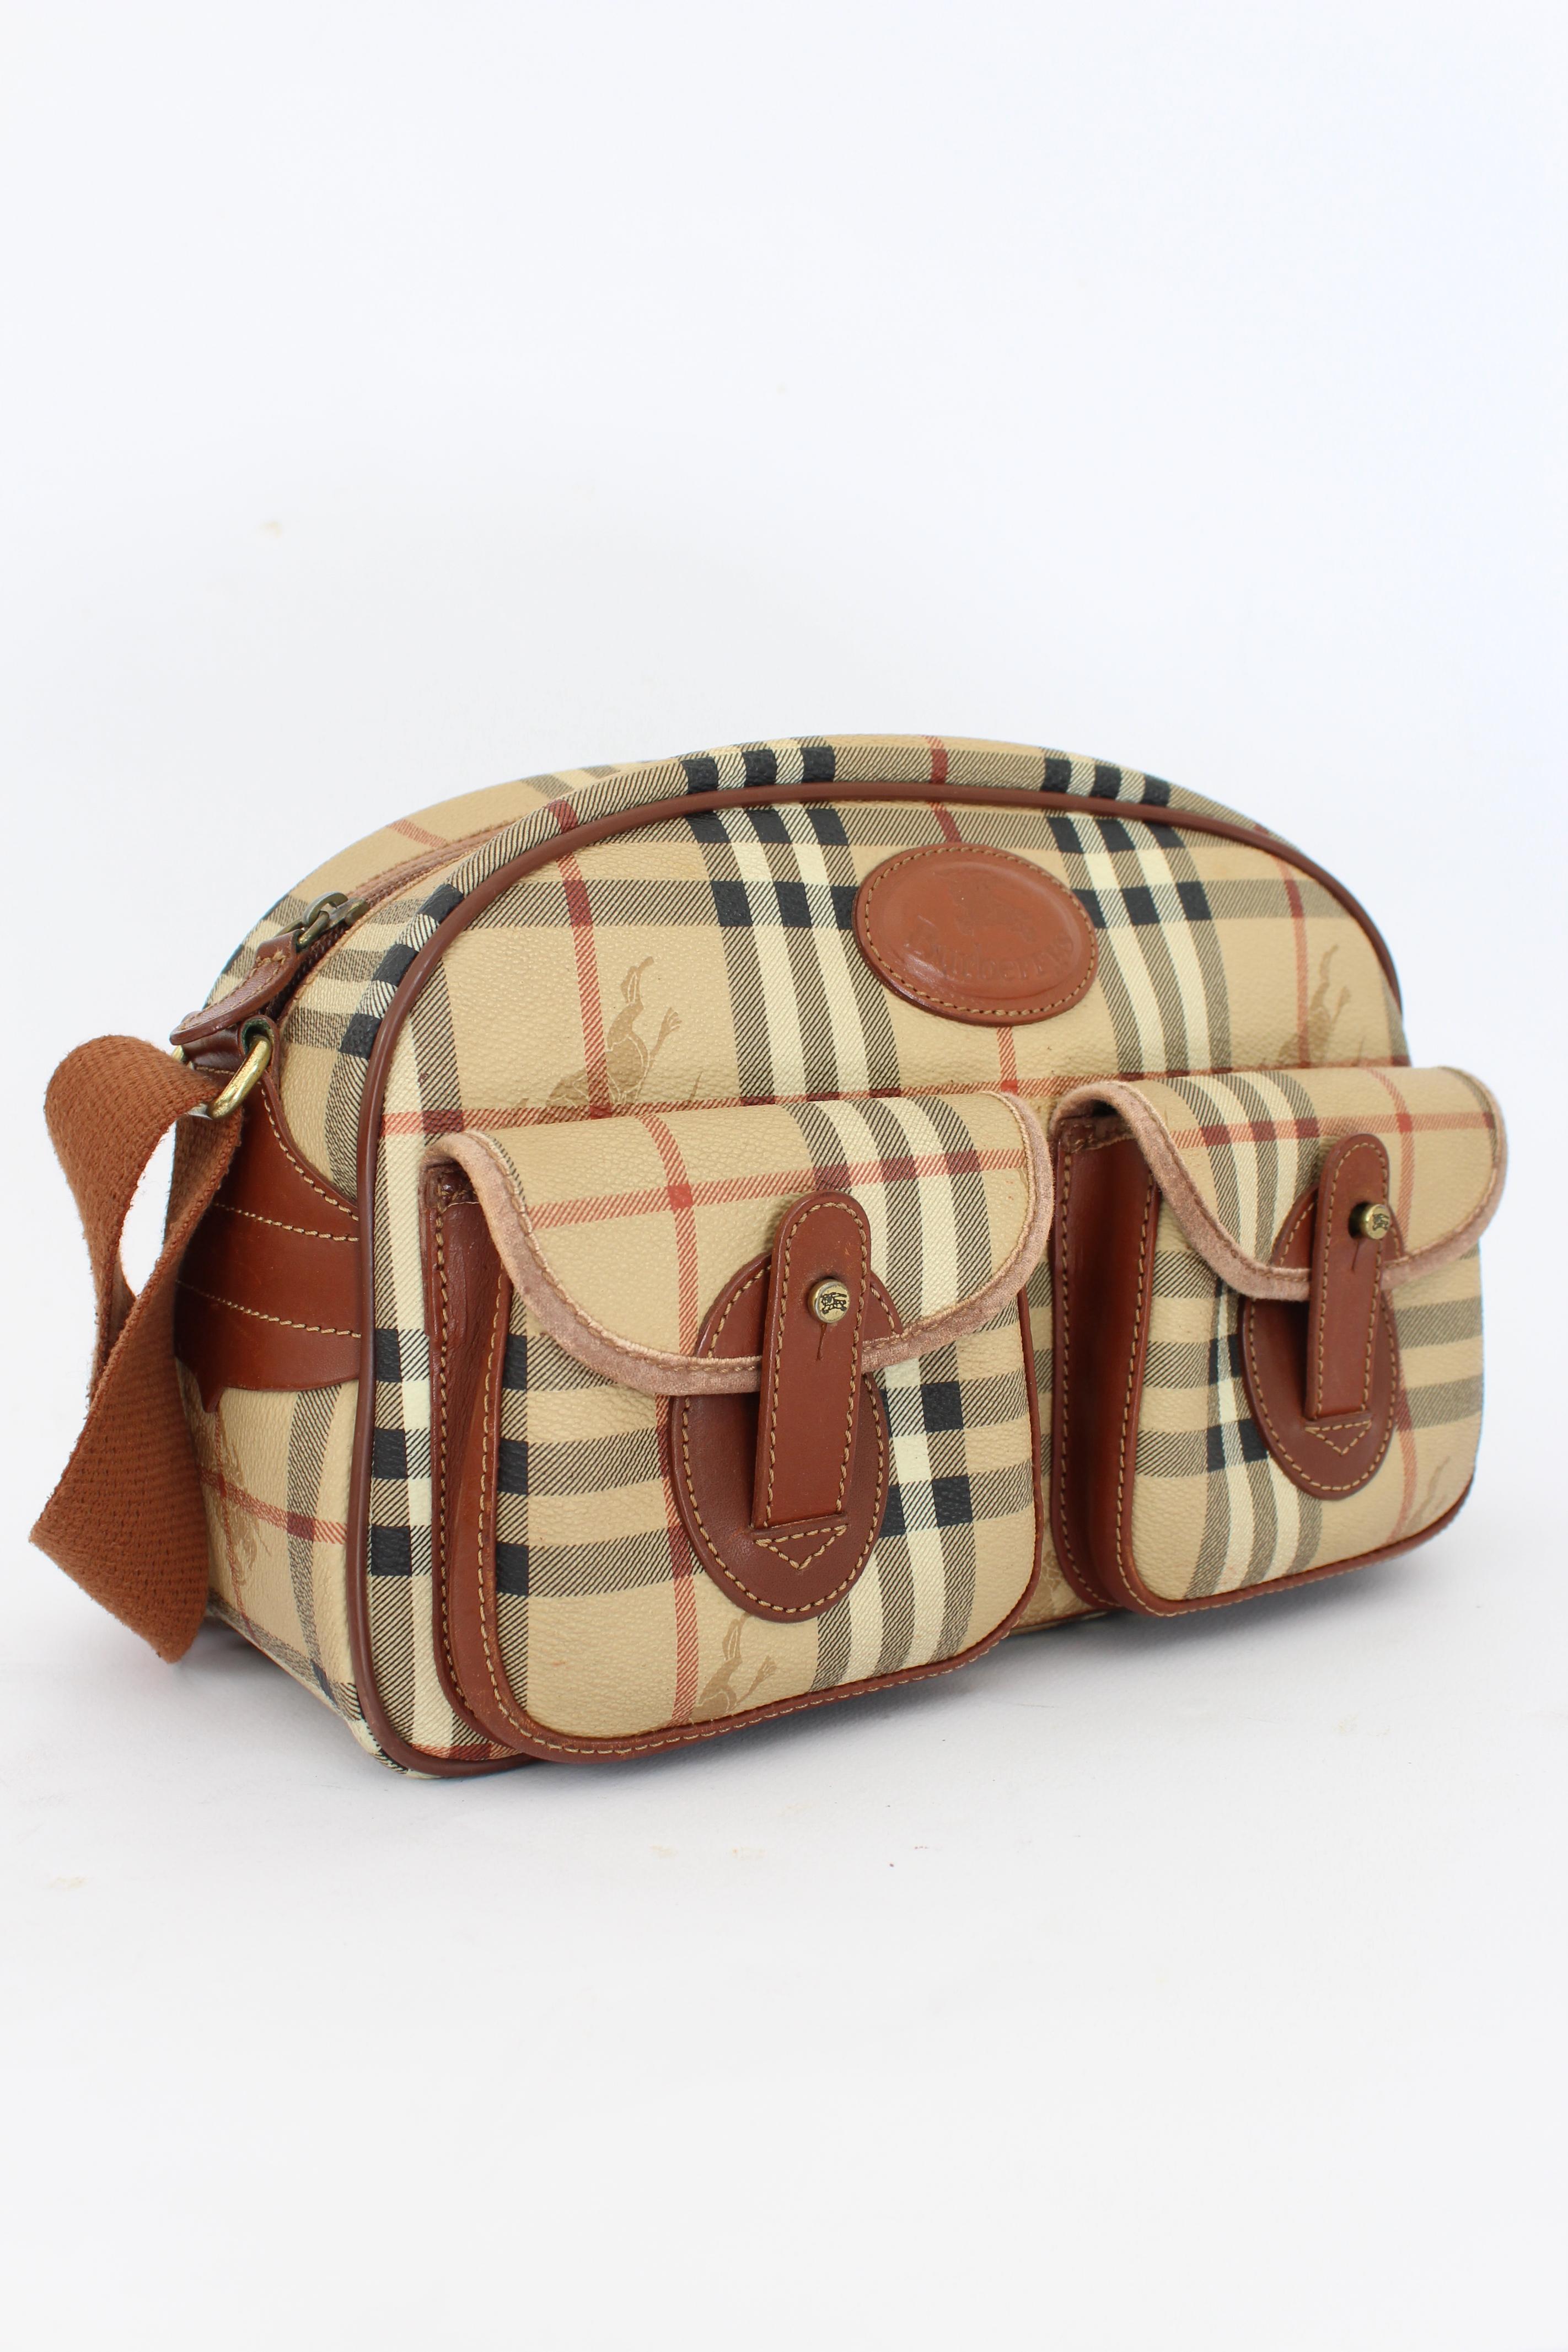 Burberry Beige Brown Leather Canvas Satchel Shoulder Bag In Good Condition In Brindisi, Bt